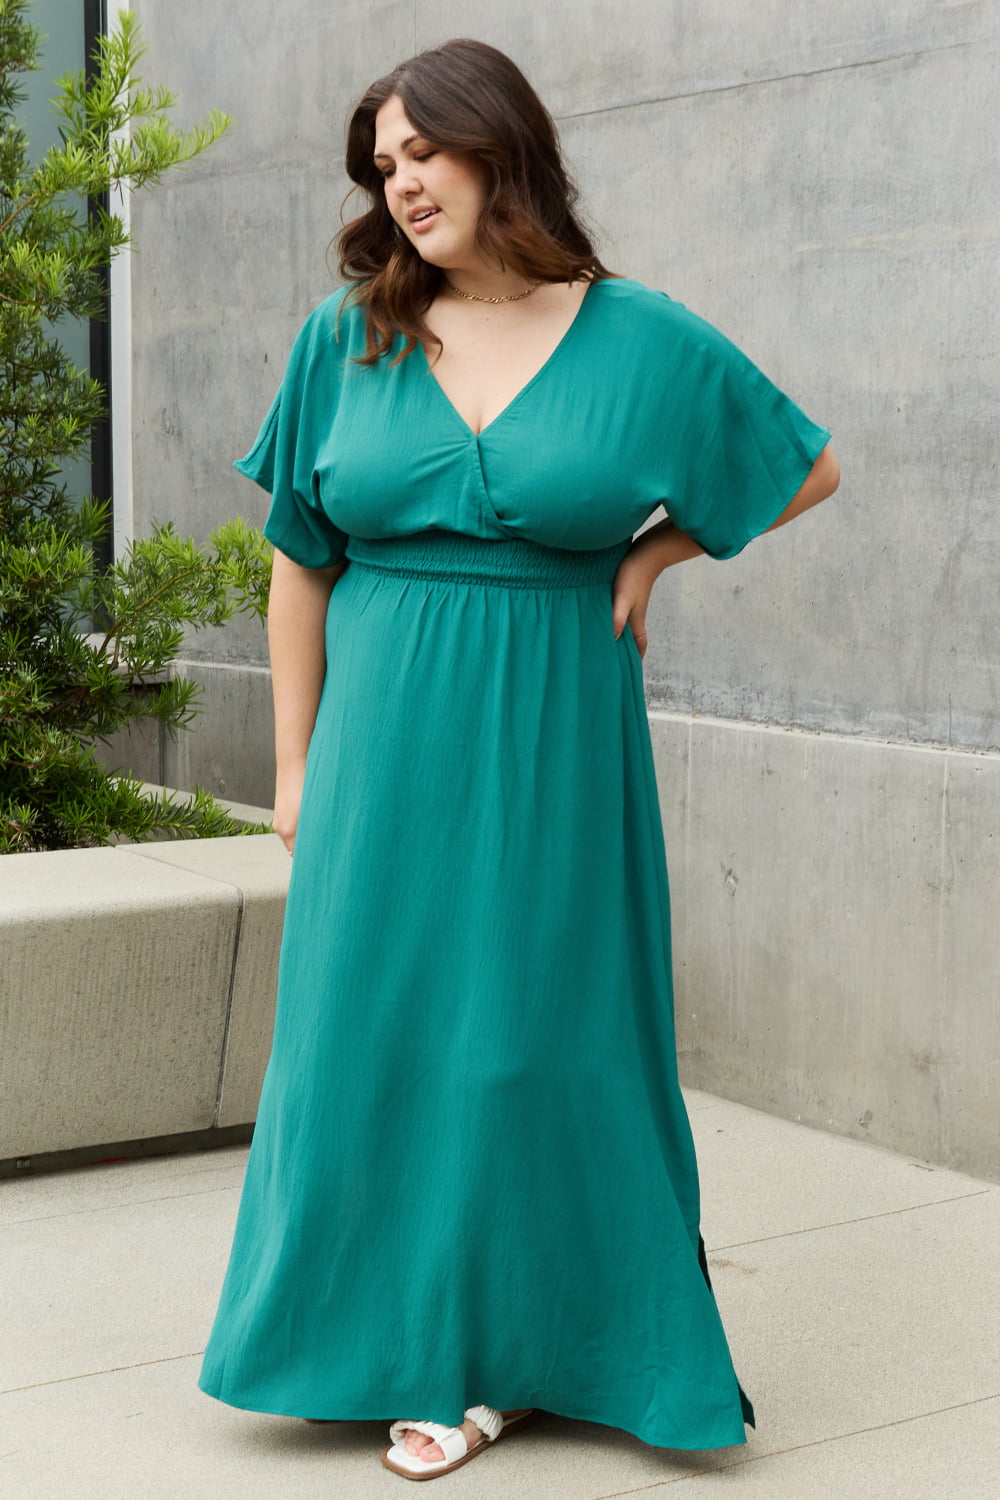 Uylee's Boutique ODDI Full Size Woven Wrap Maxi Dress